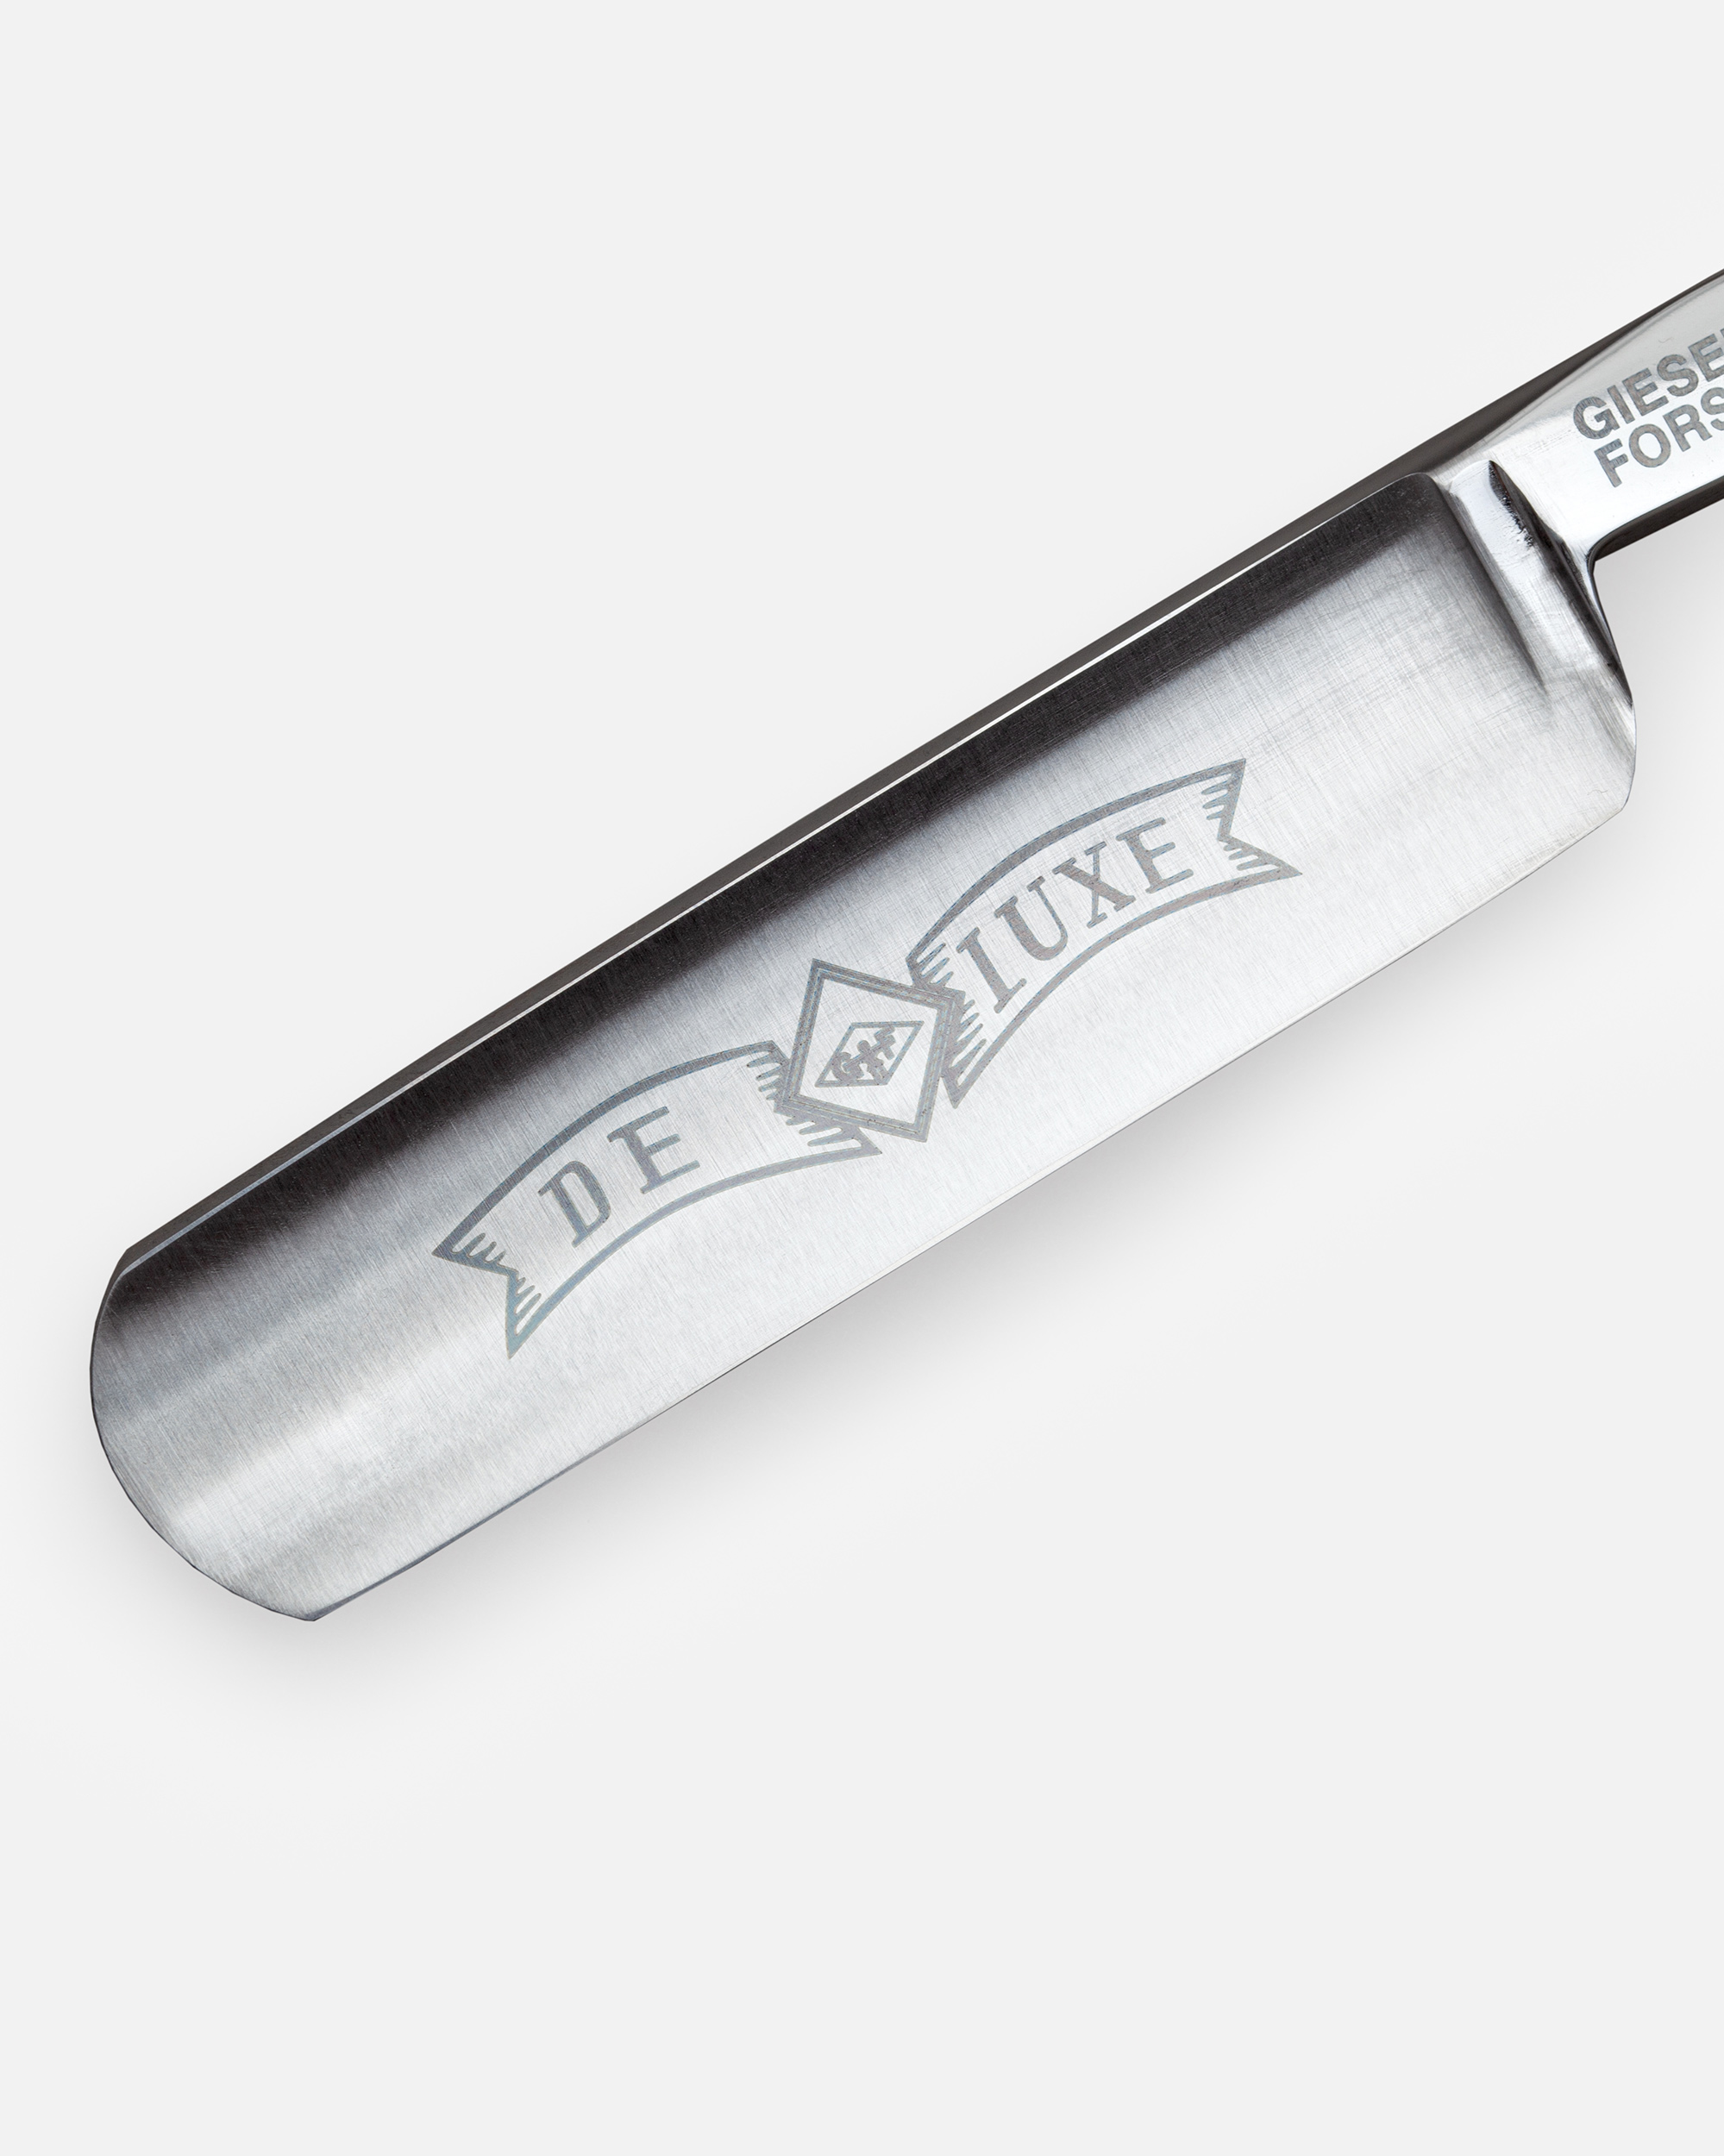 G&F Timor® Deluxe Rasiermesser 5/8 cs mit Ebenholzschale